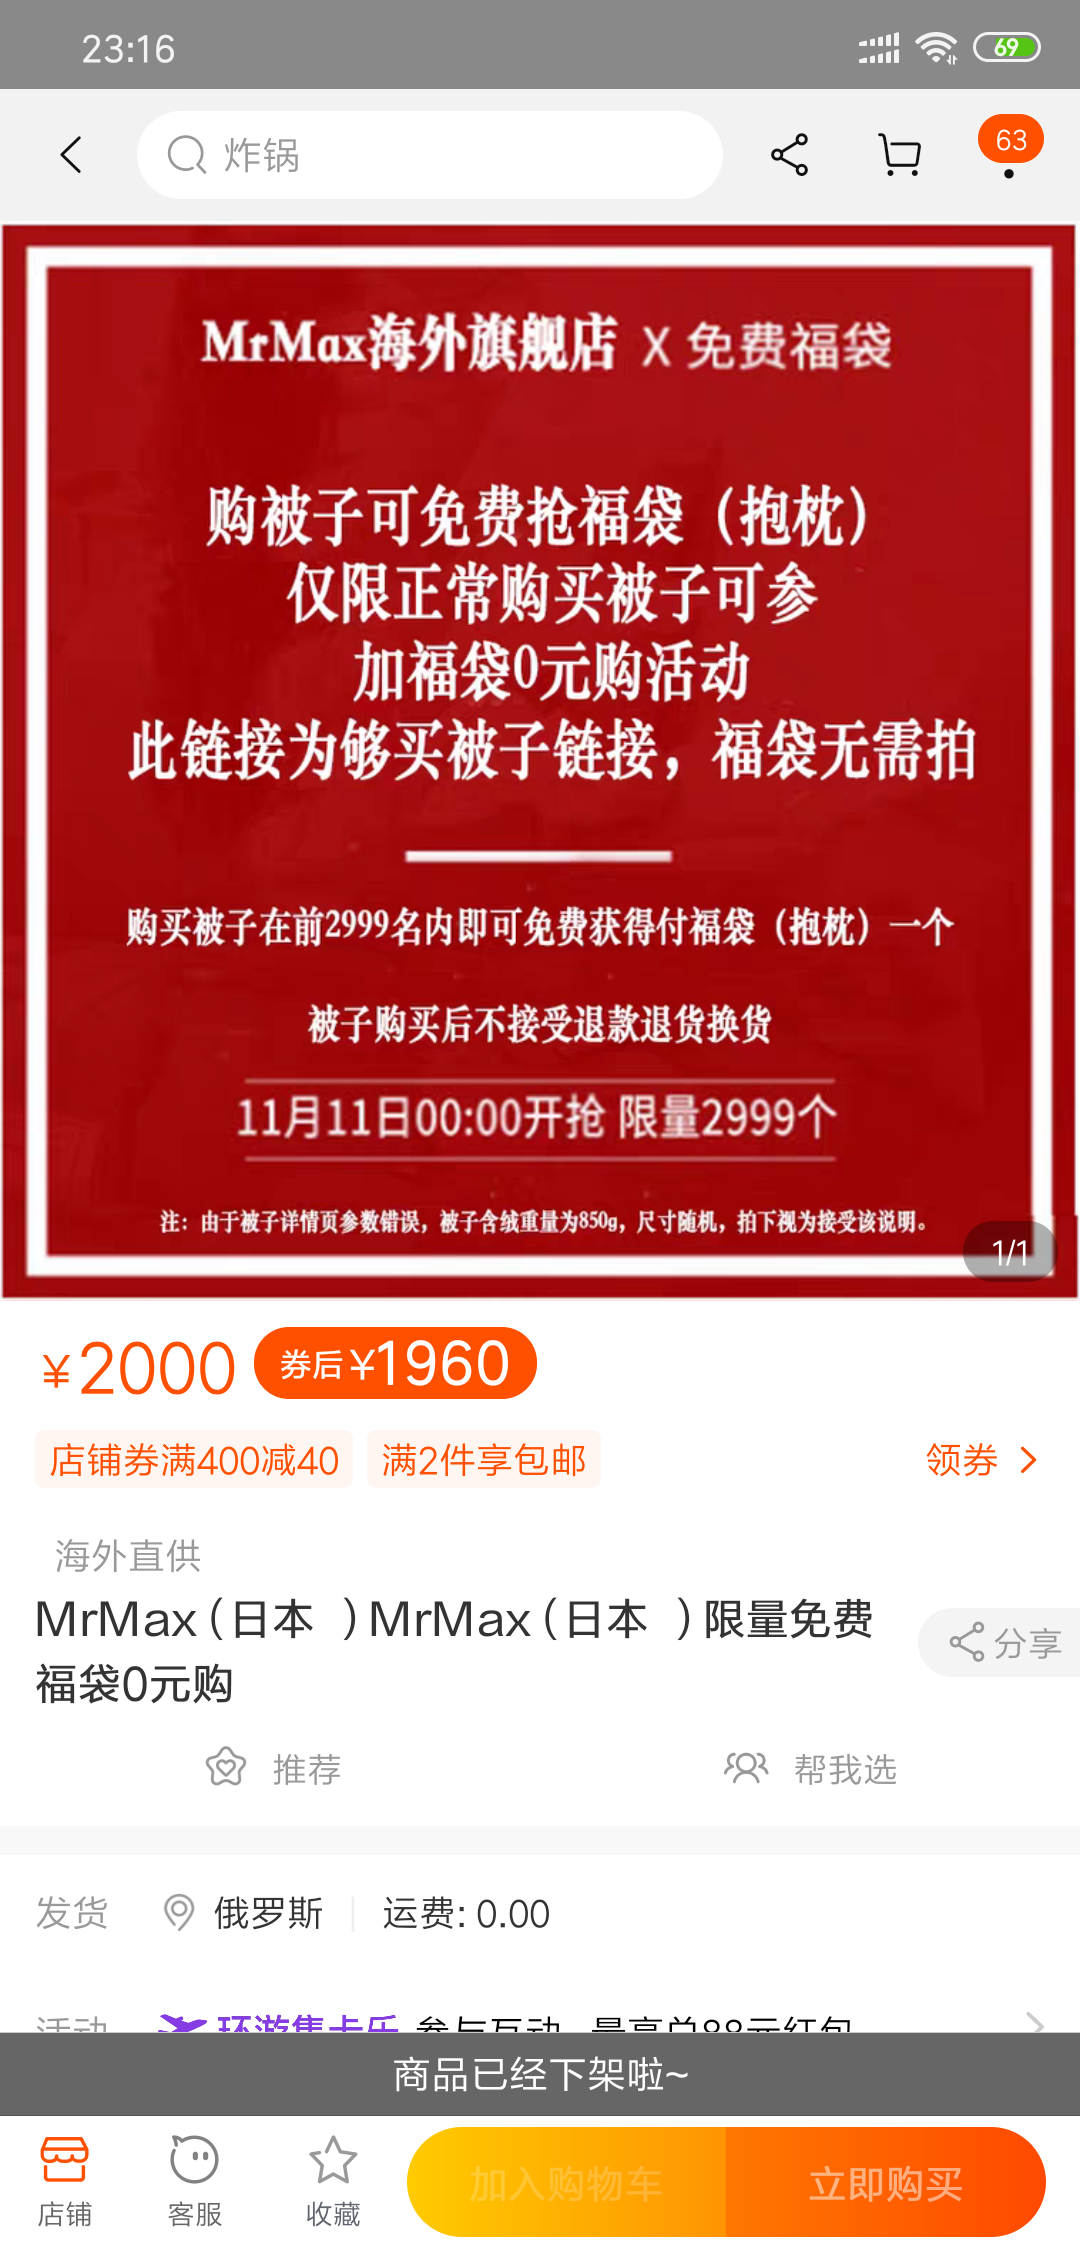 Screenshot_2019-11-16-23-16-02-970_com_taobao_taobao.png